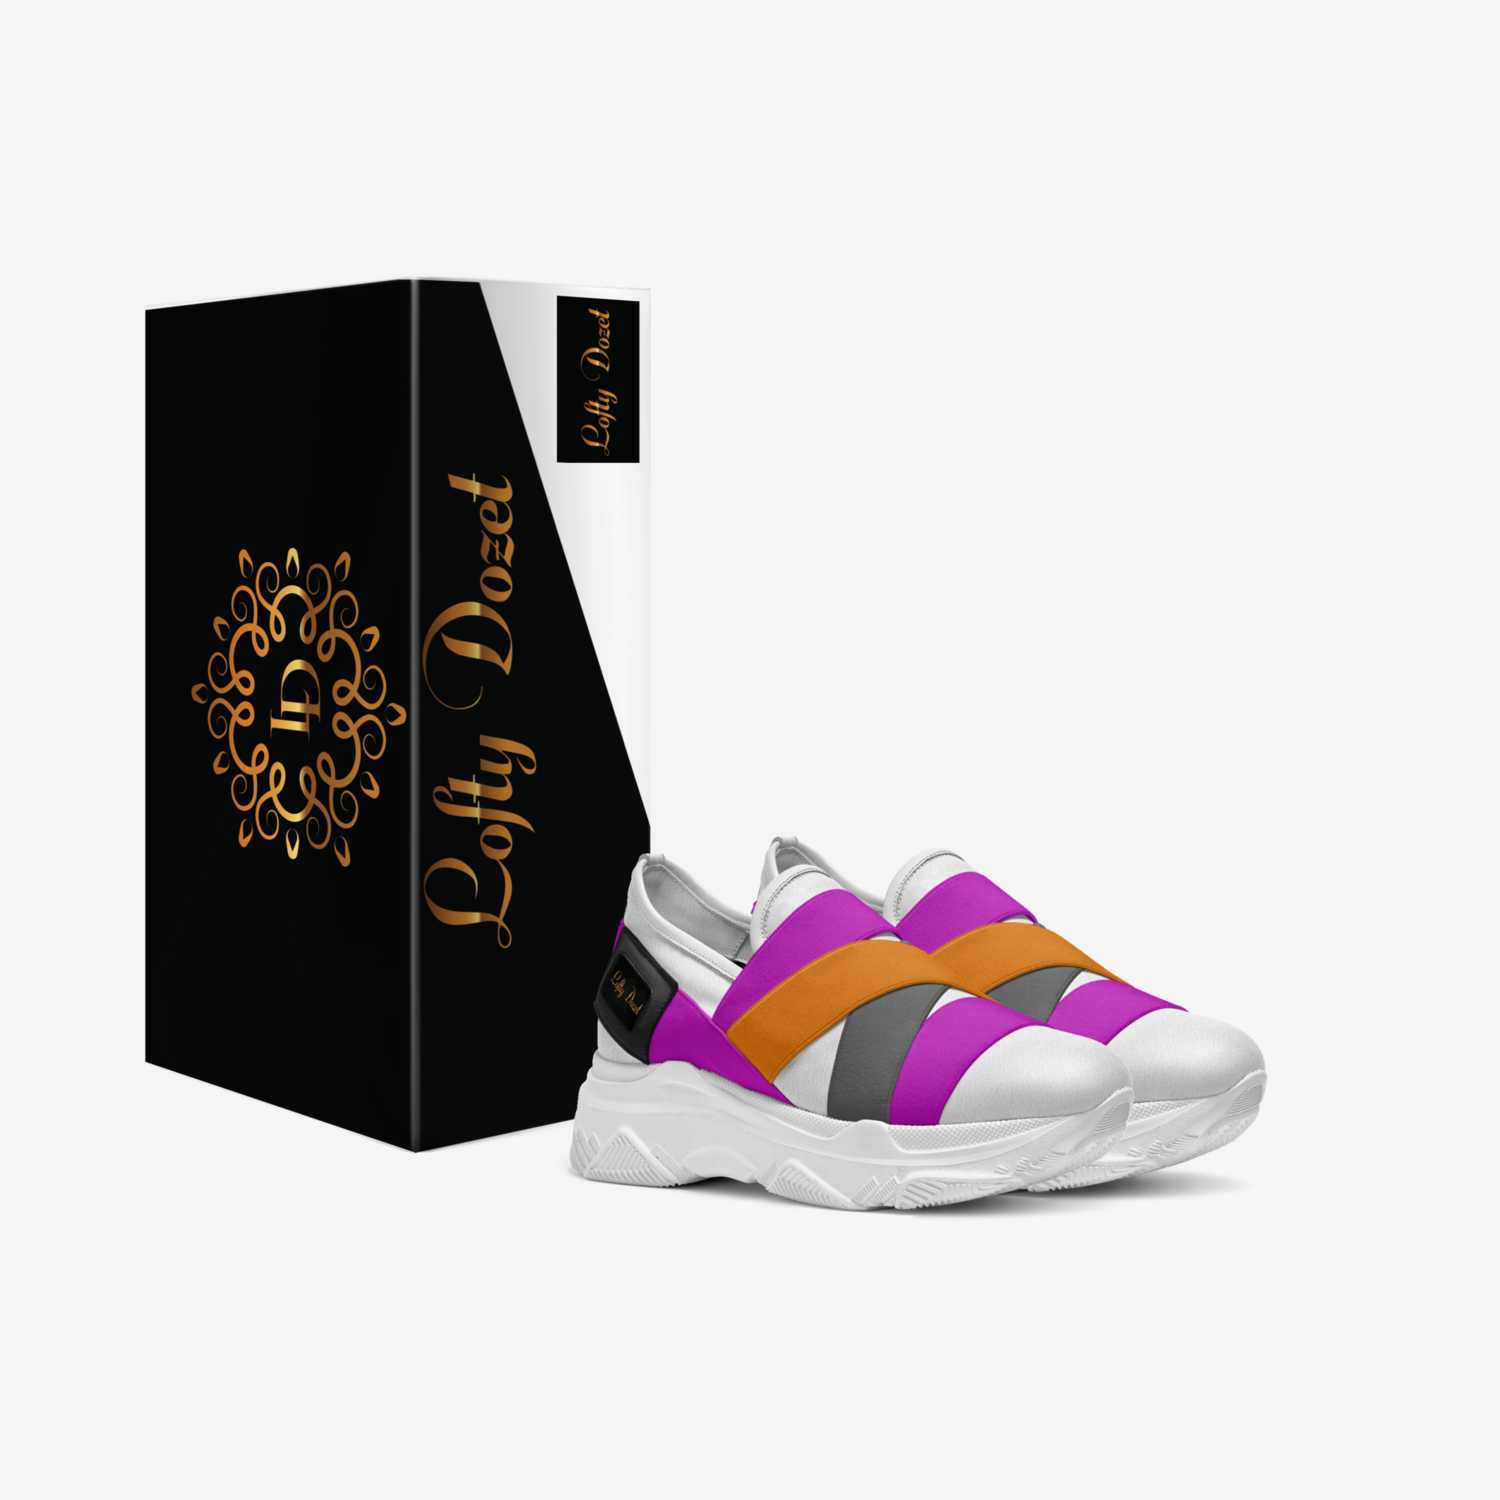 Hip custom made in Italy shoes by Adedoyin Olofintuyi | Box view